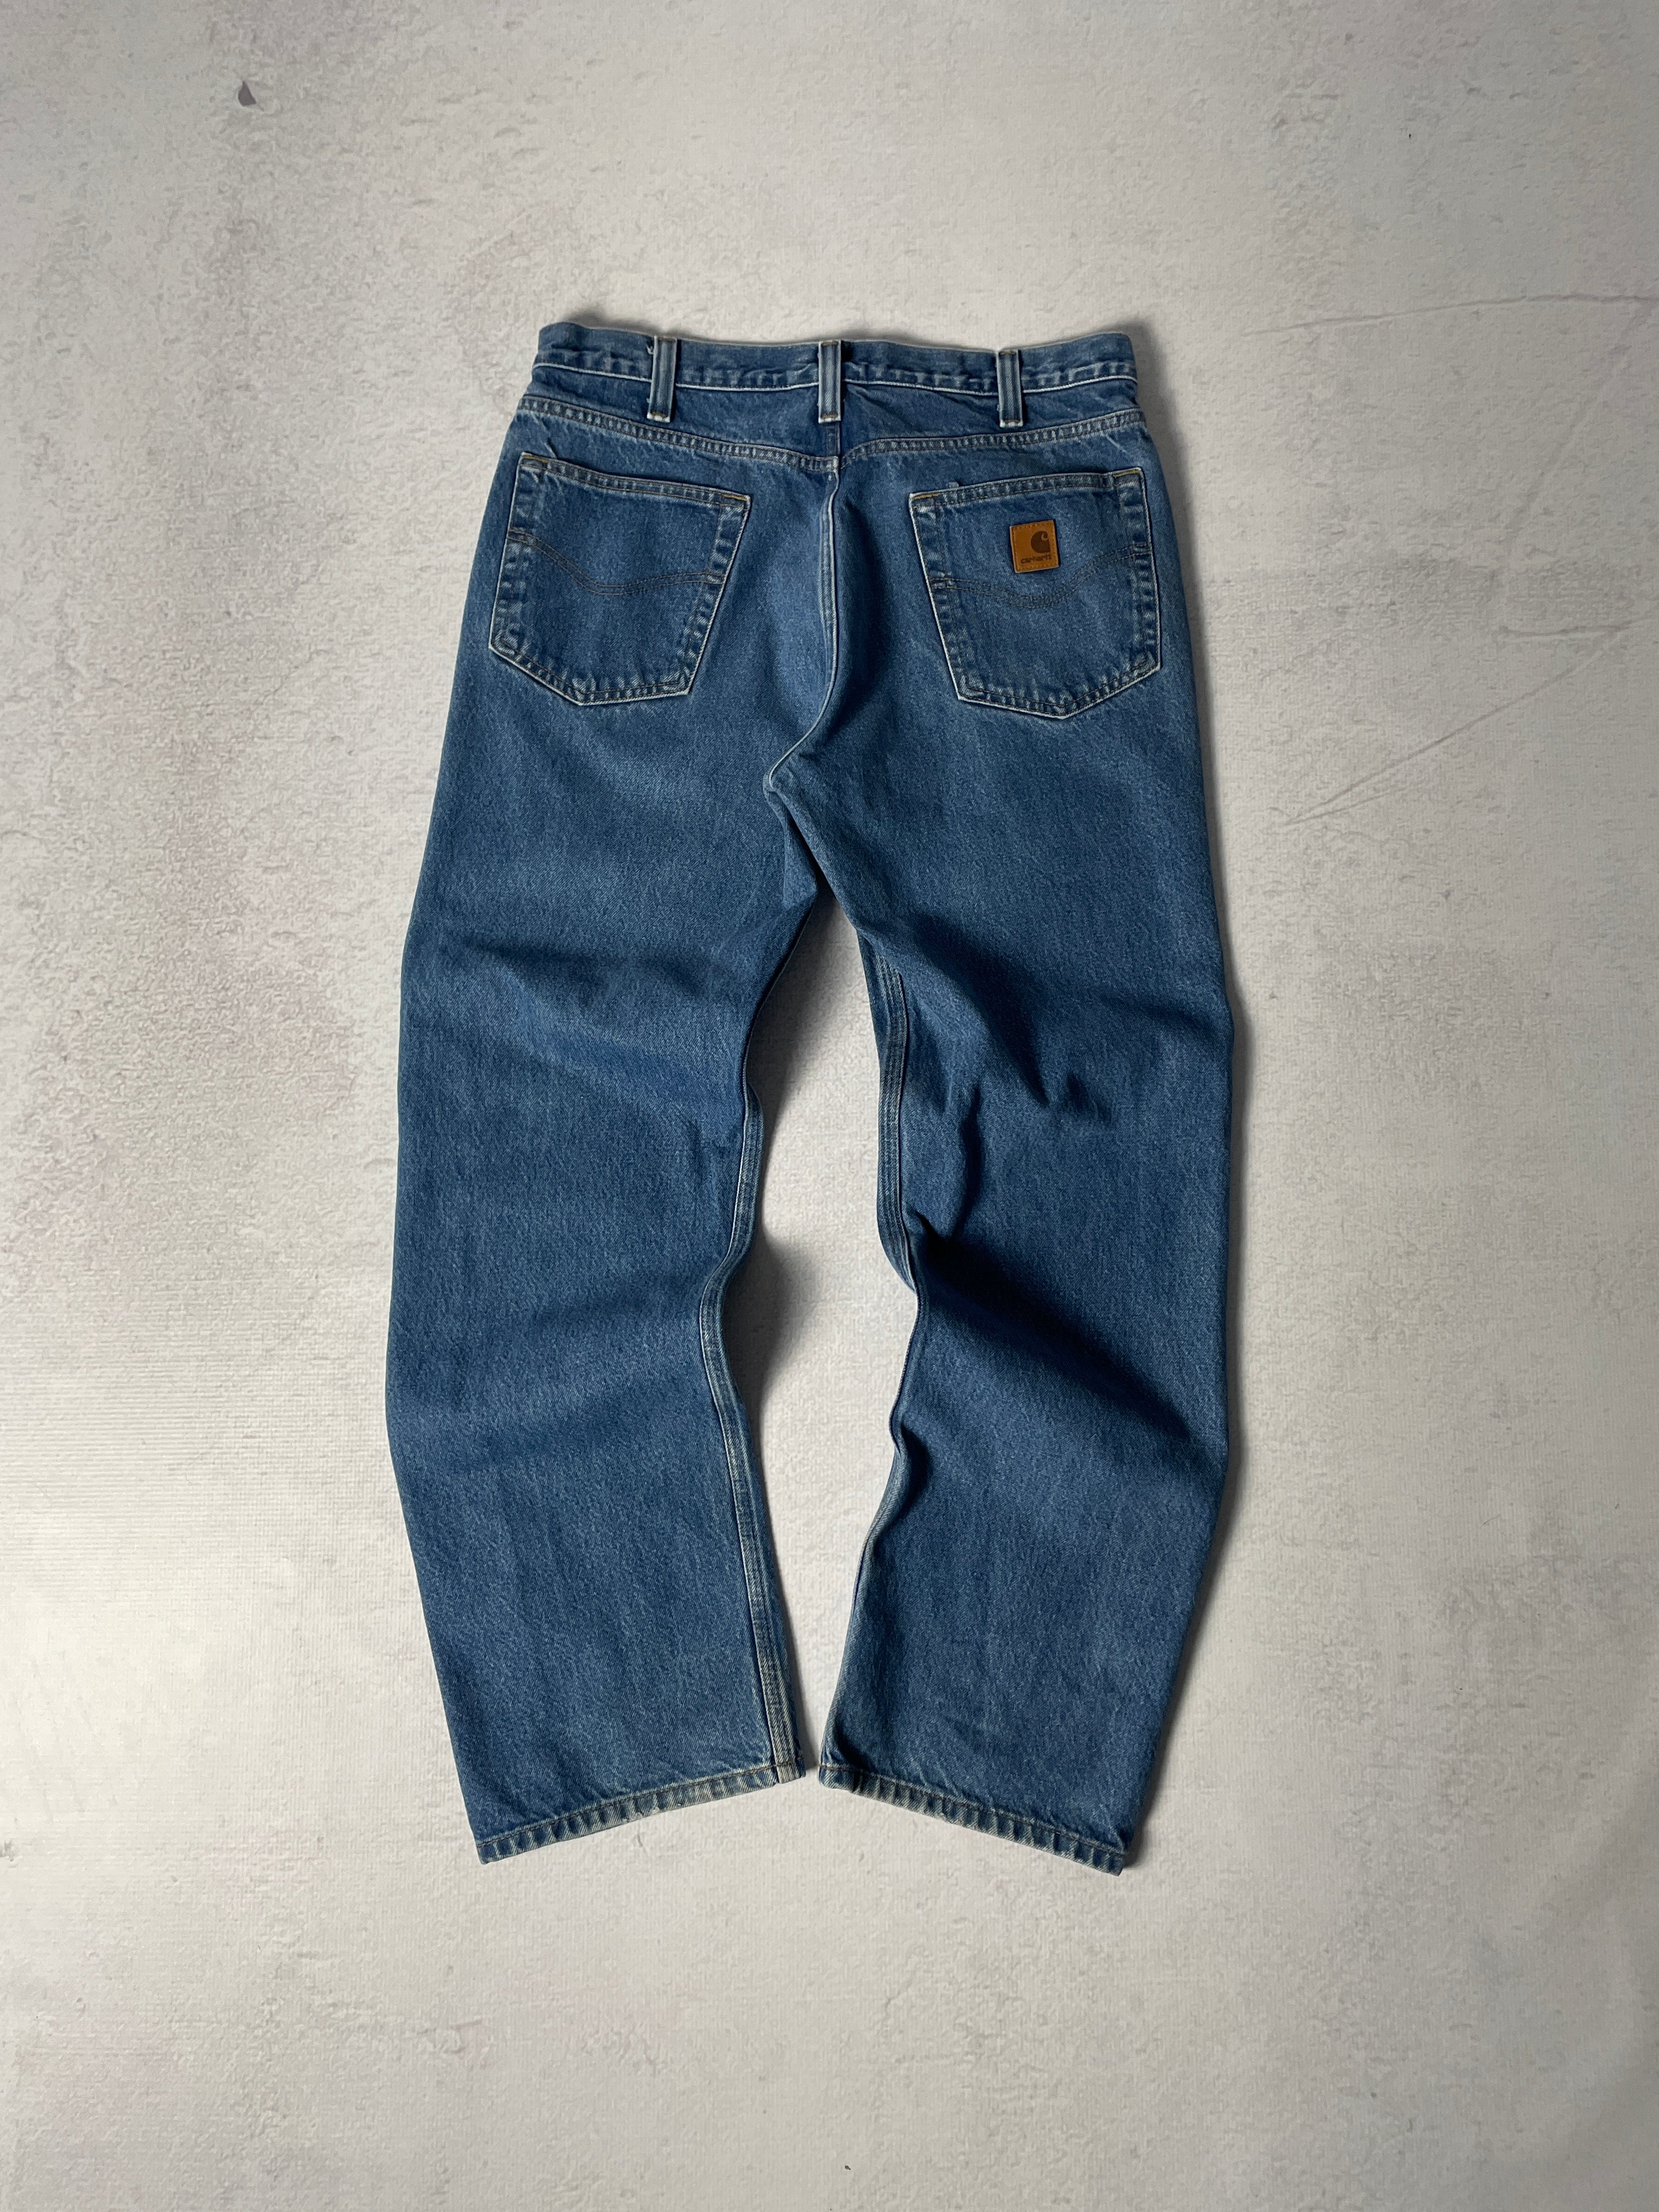 Vintage Carhartt Jeans - Men's 34 x 32